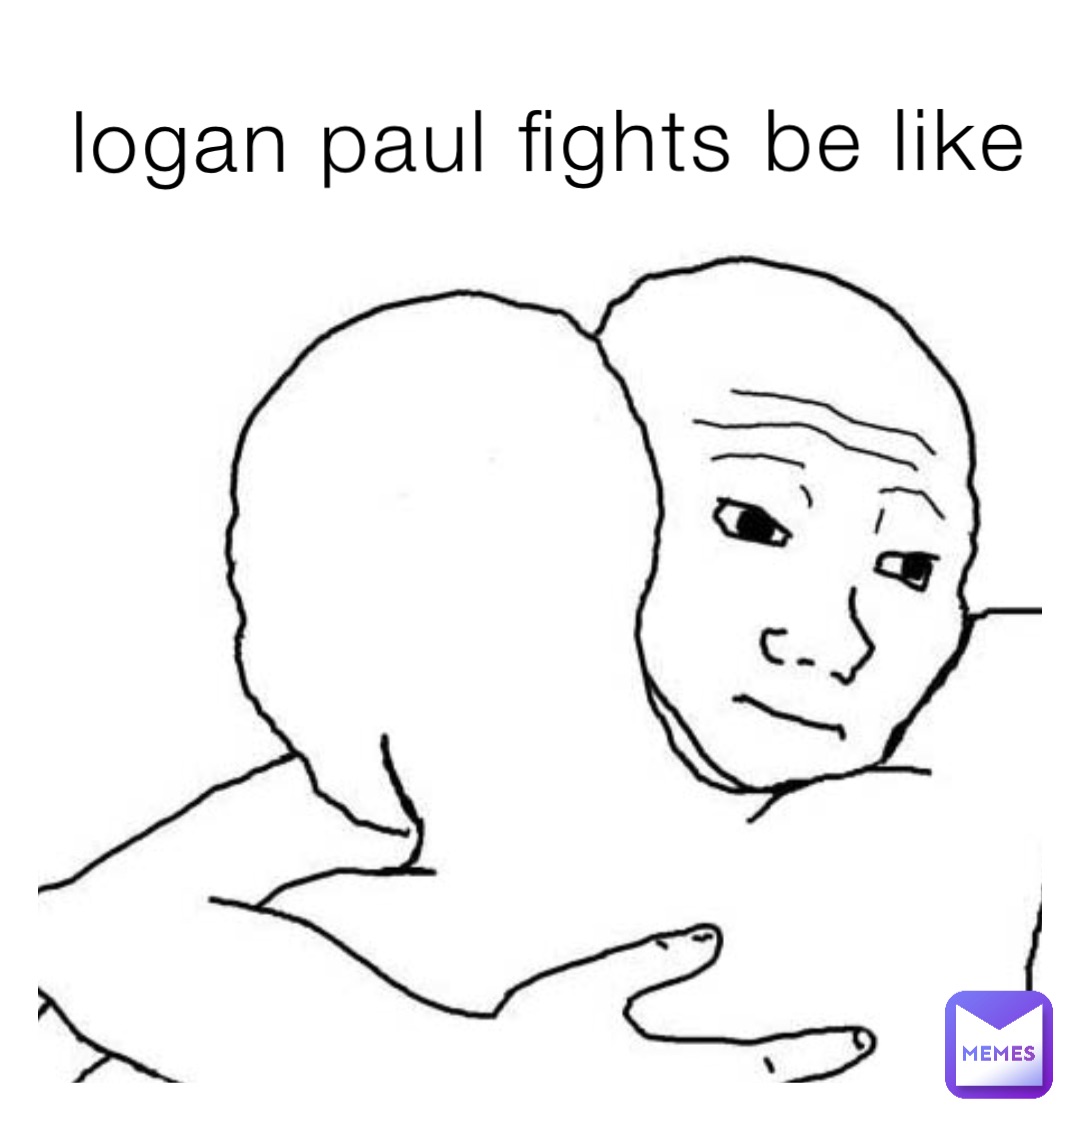 logan paul fights be like